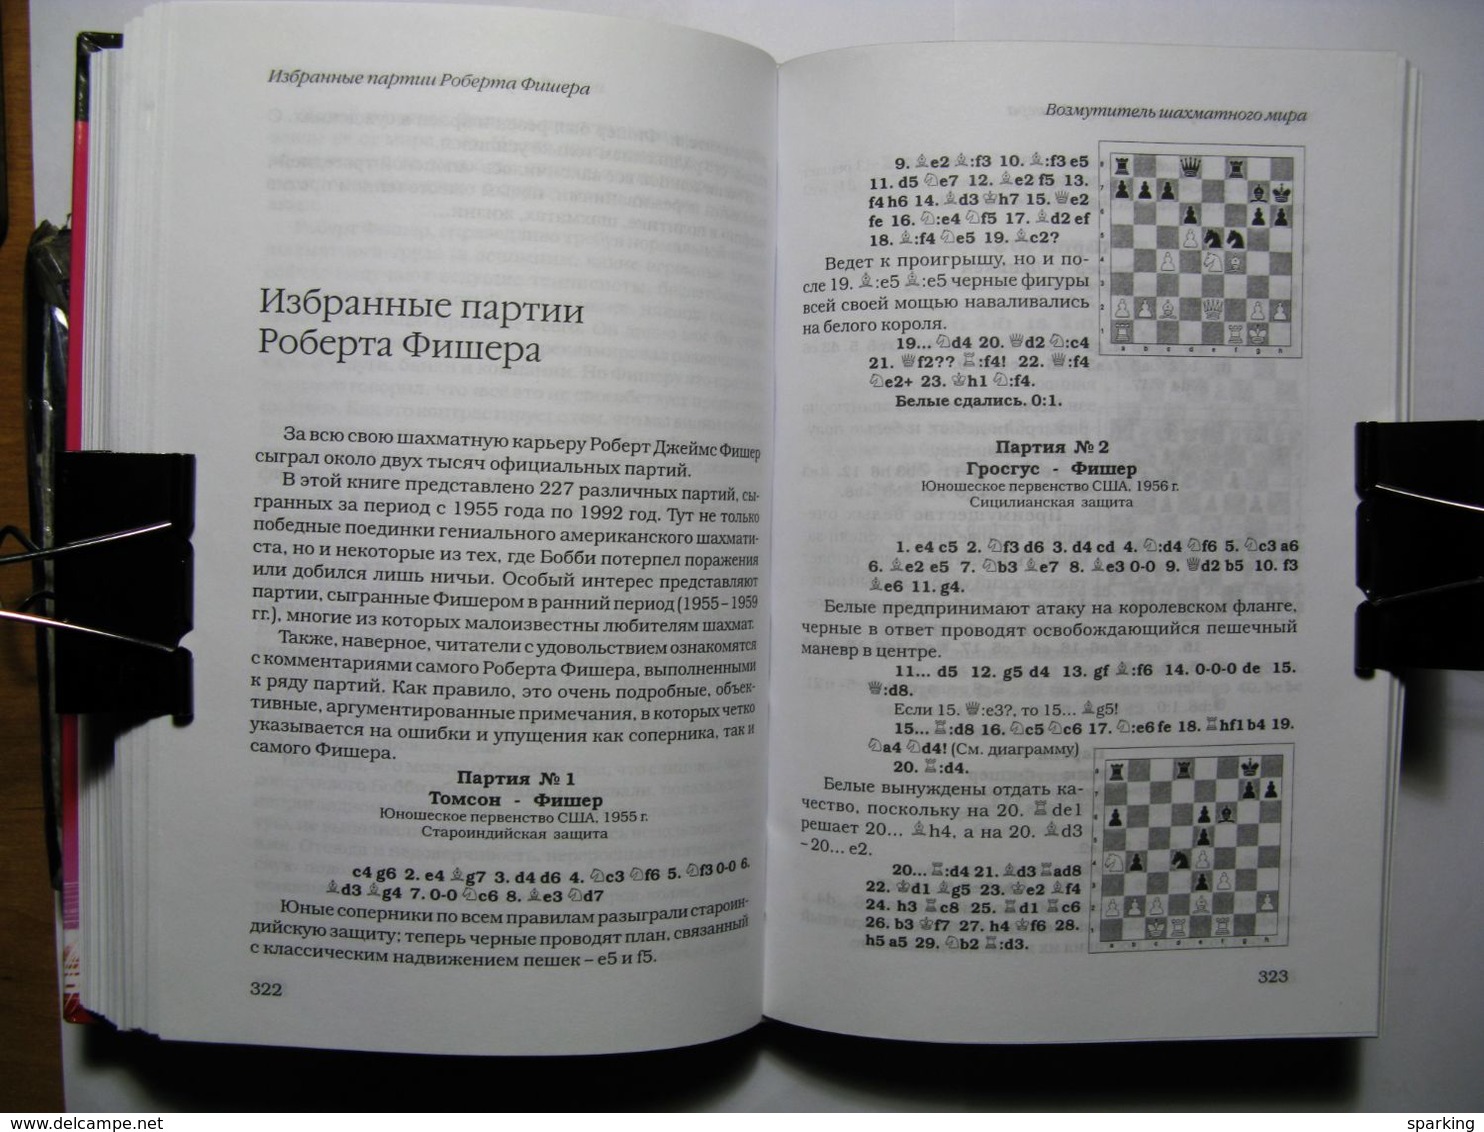 The revolter chess world.  Life and work of Robert Fischer by Pak Baranyuk 2008